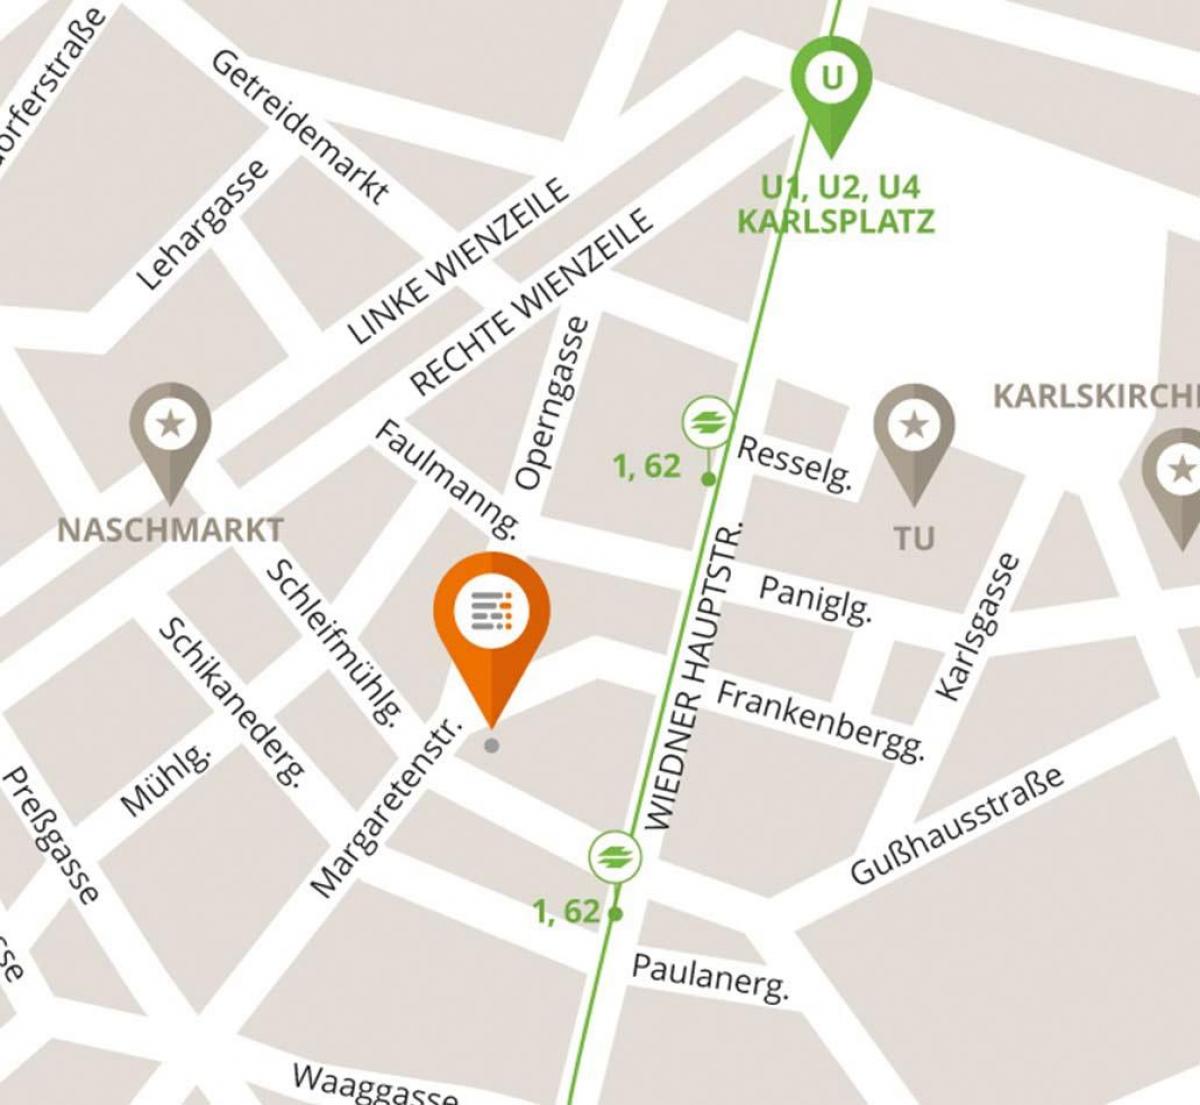 Mapa ng naschmarkt Vienna 